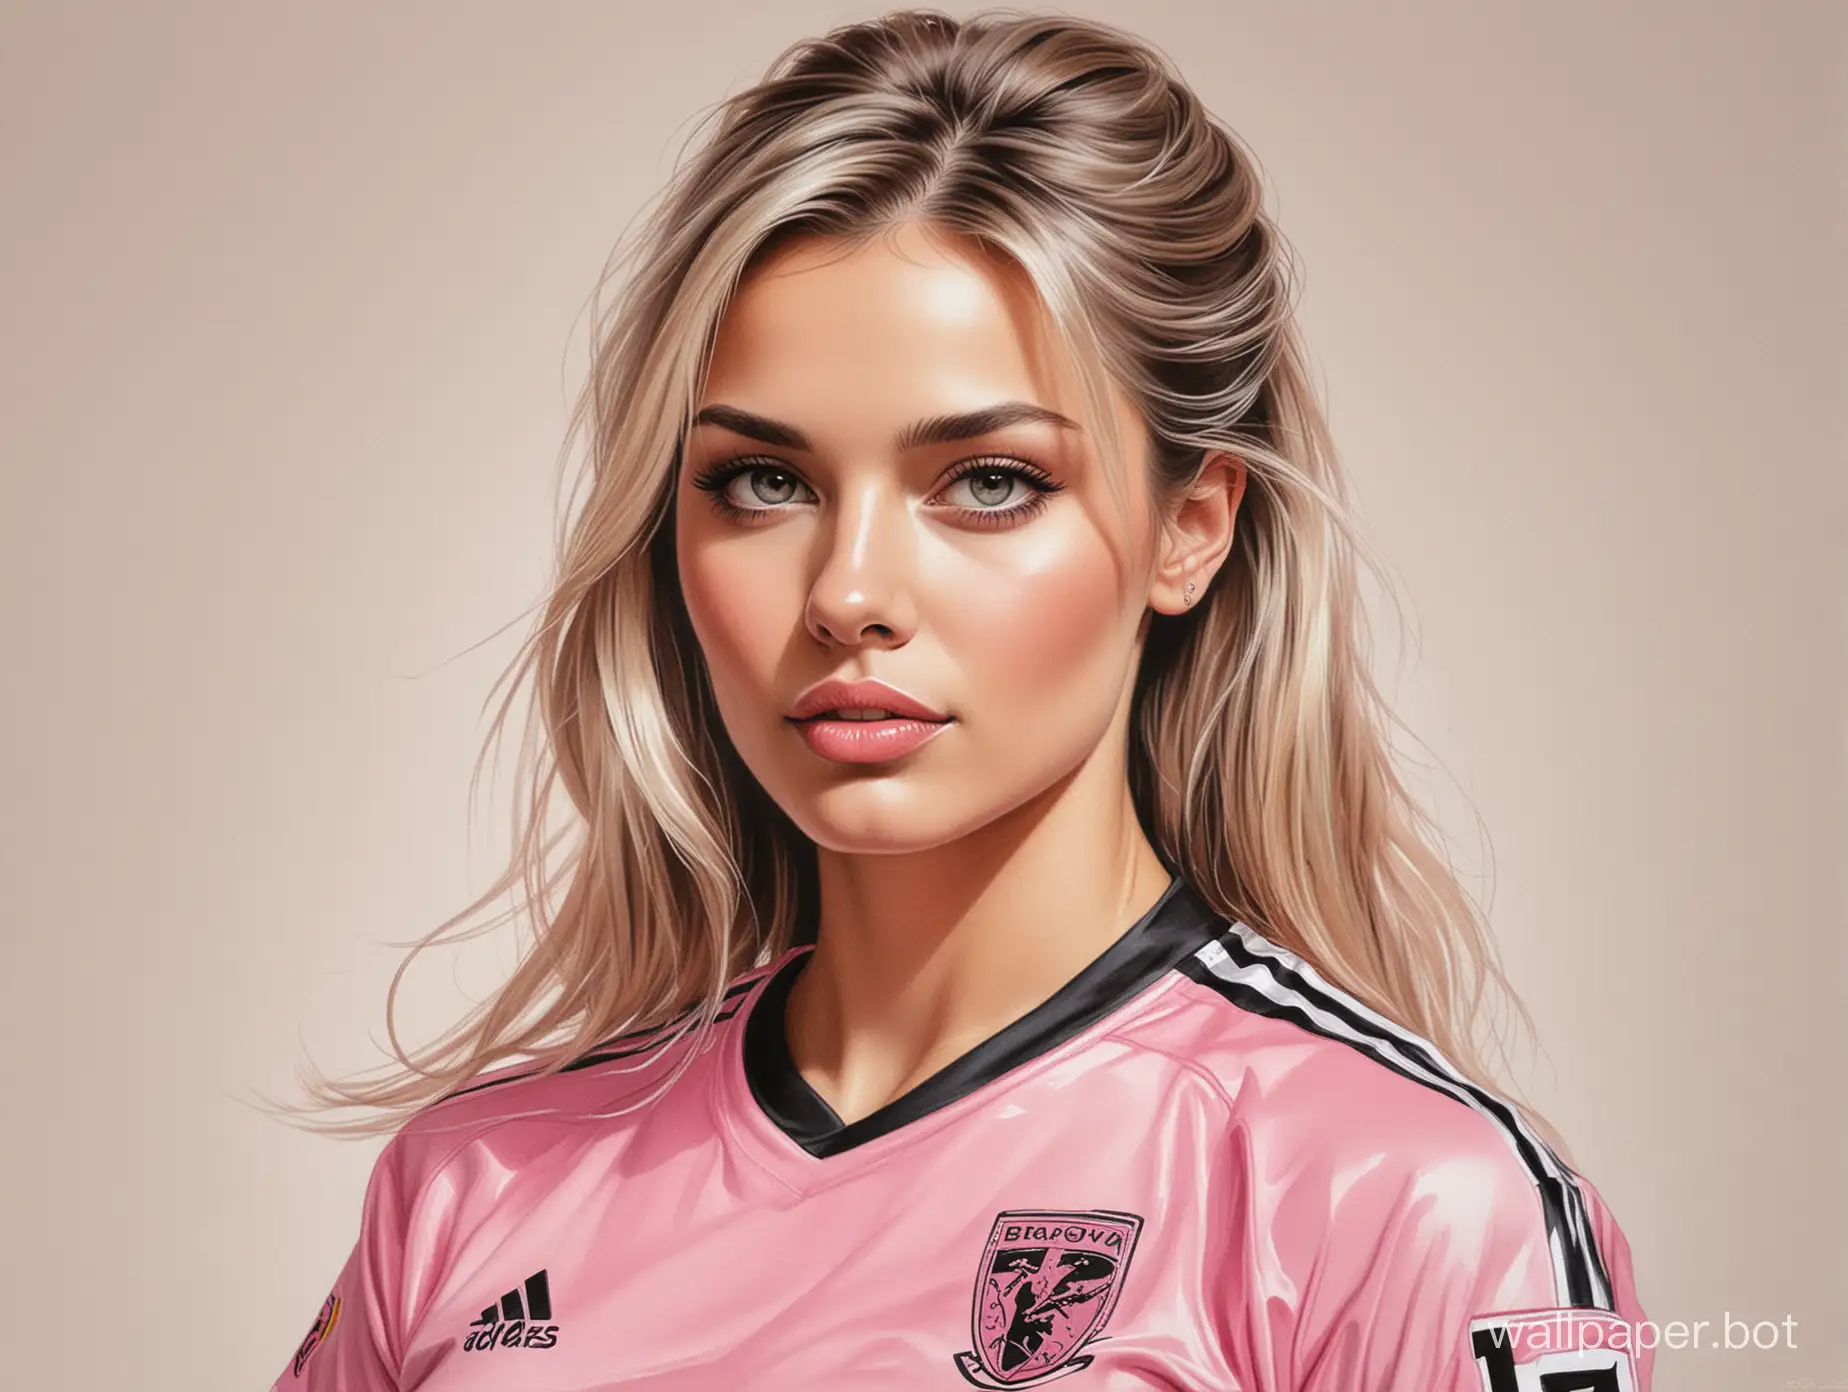 Portrait-Sketch-of-Irina-Pegova-in-BlackPink-Soccer-Uniform-on-White-Background